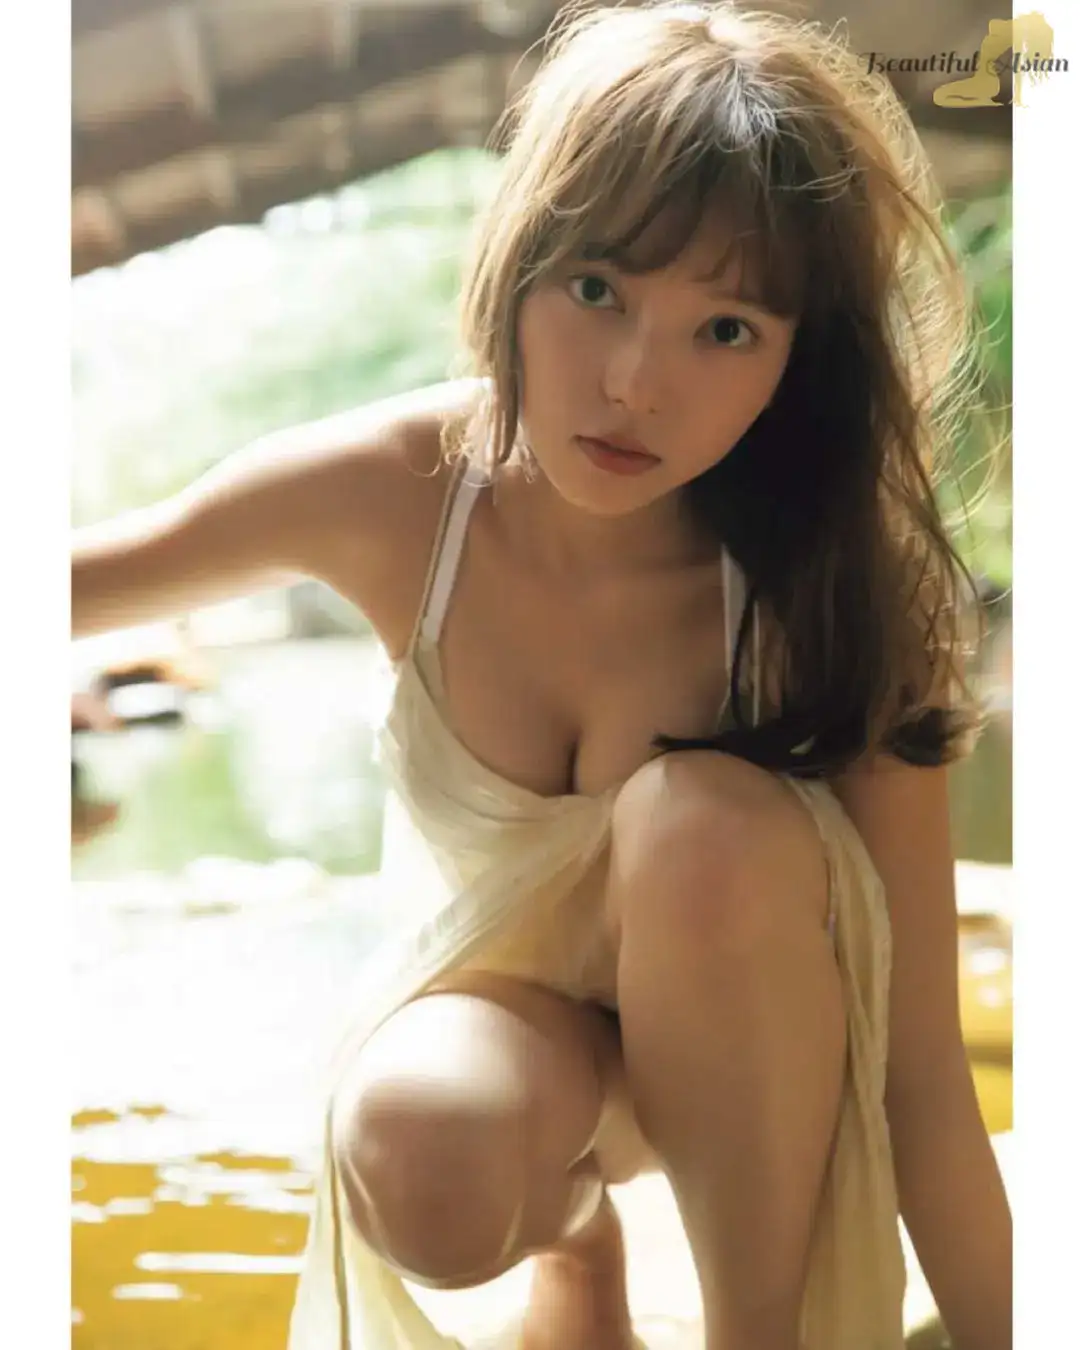 gorgeous Japanese girl pic